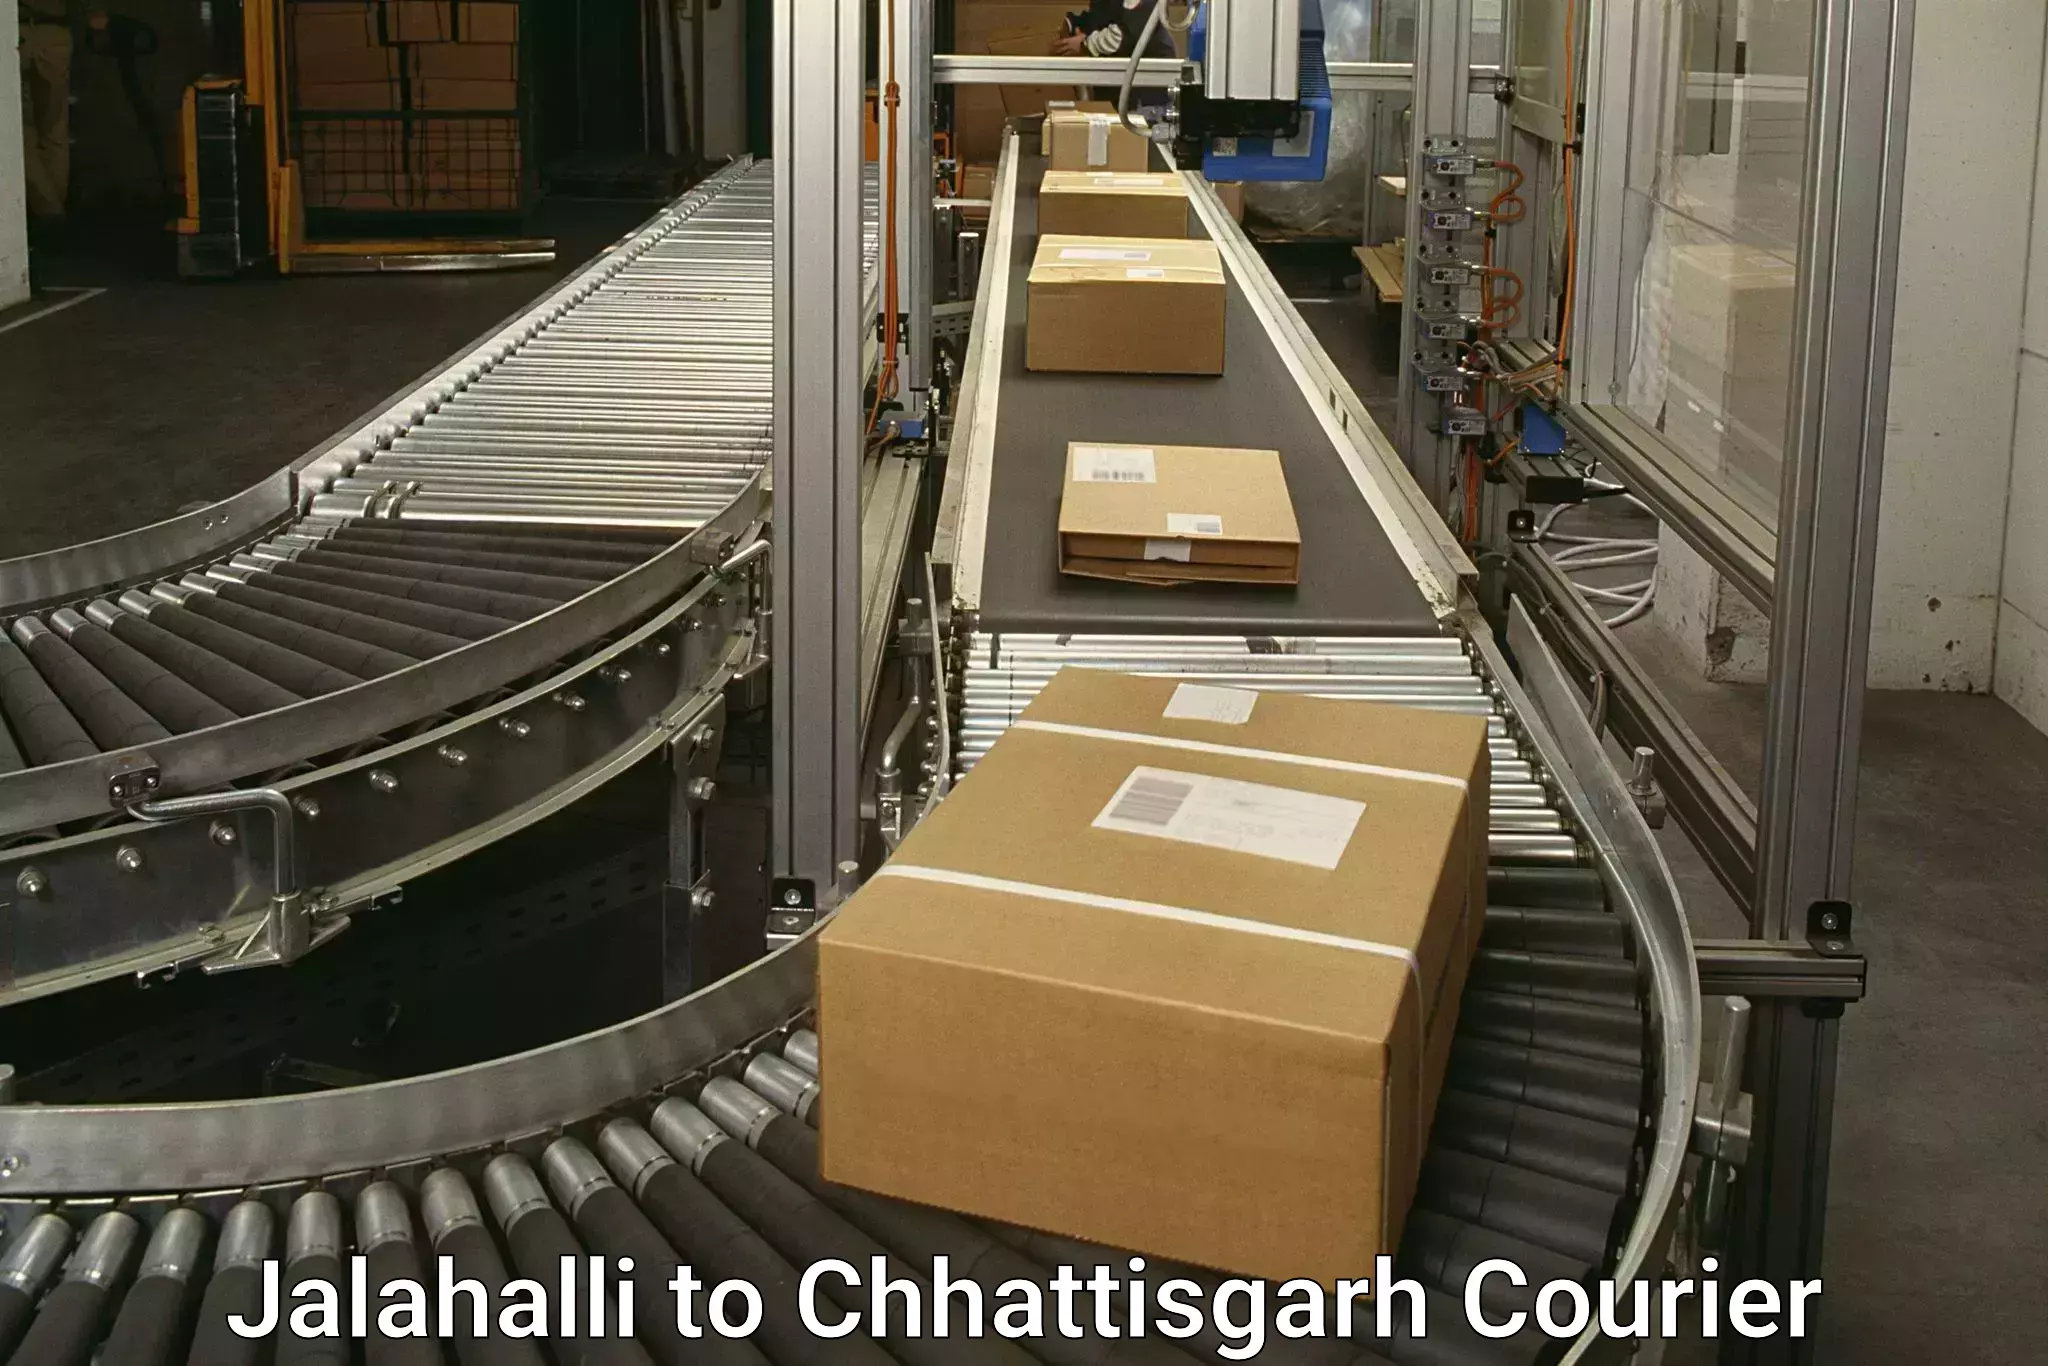 Courier app Jalahalli to Chhattisgarh